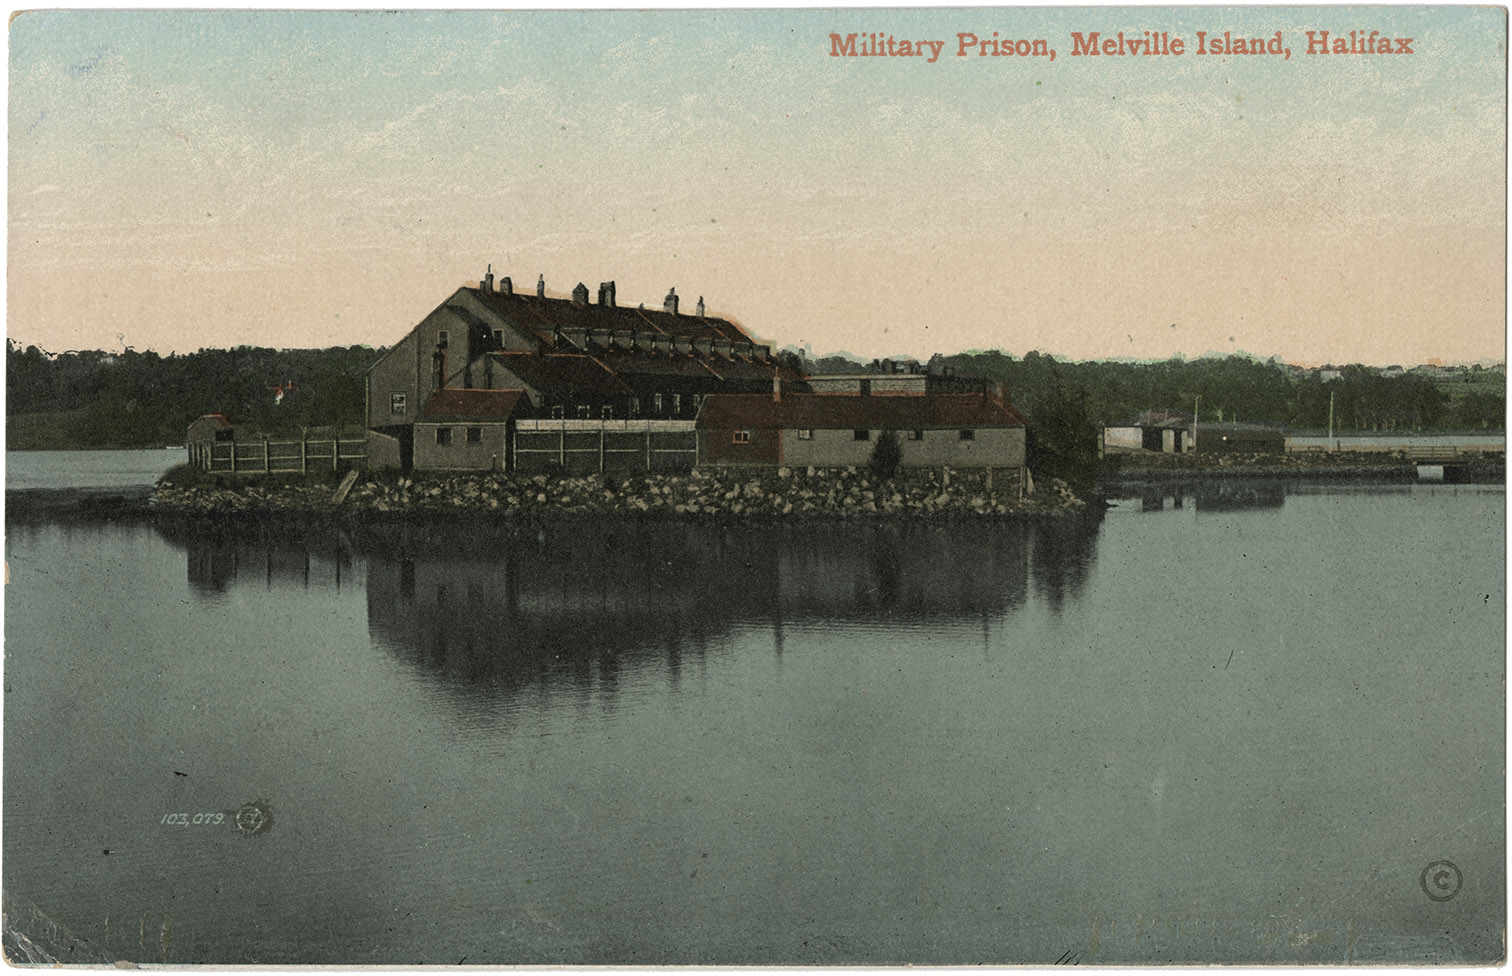 communityalbums - Military Prison, Melville Island, Halifax